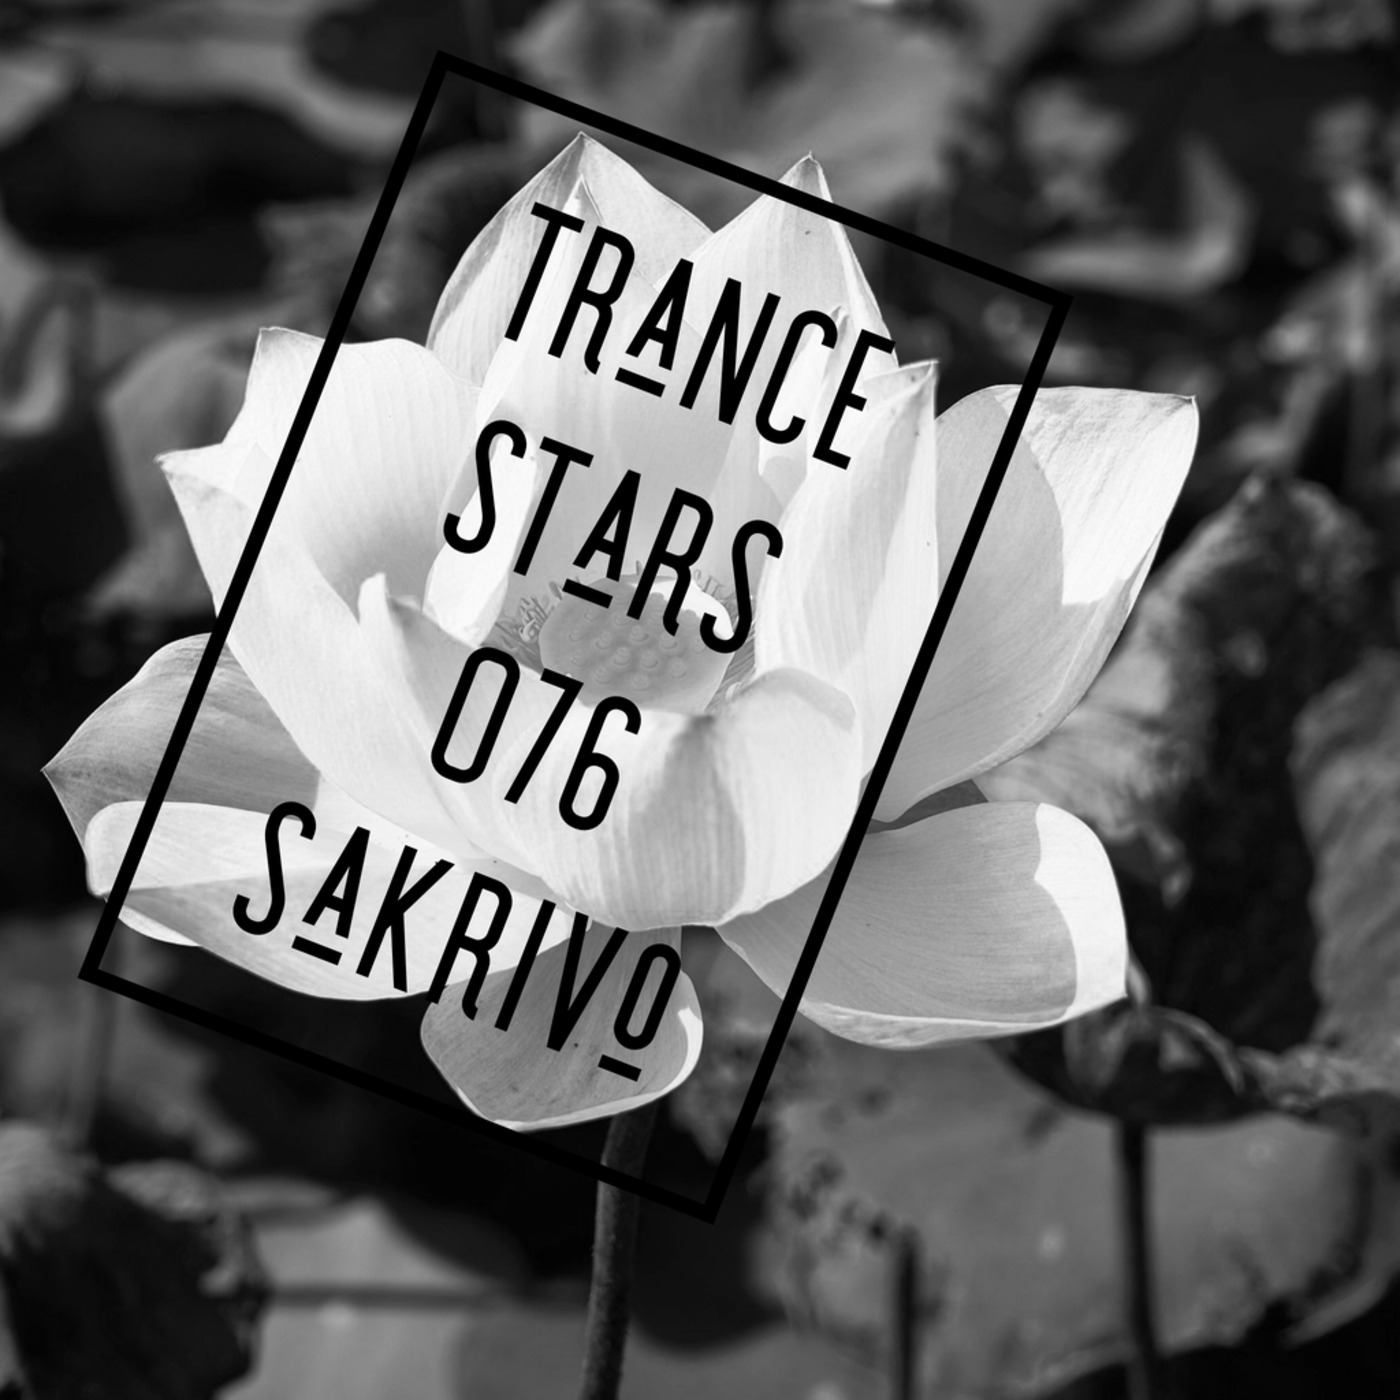 Sakrivo - Trance Stars 076 - Spice Of Life